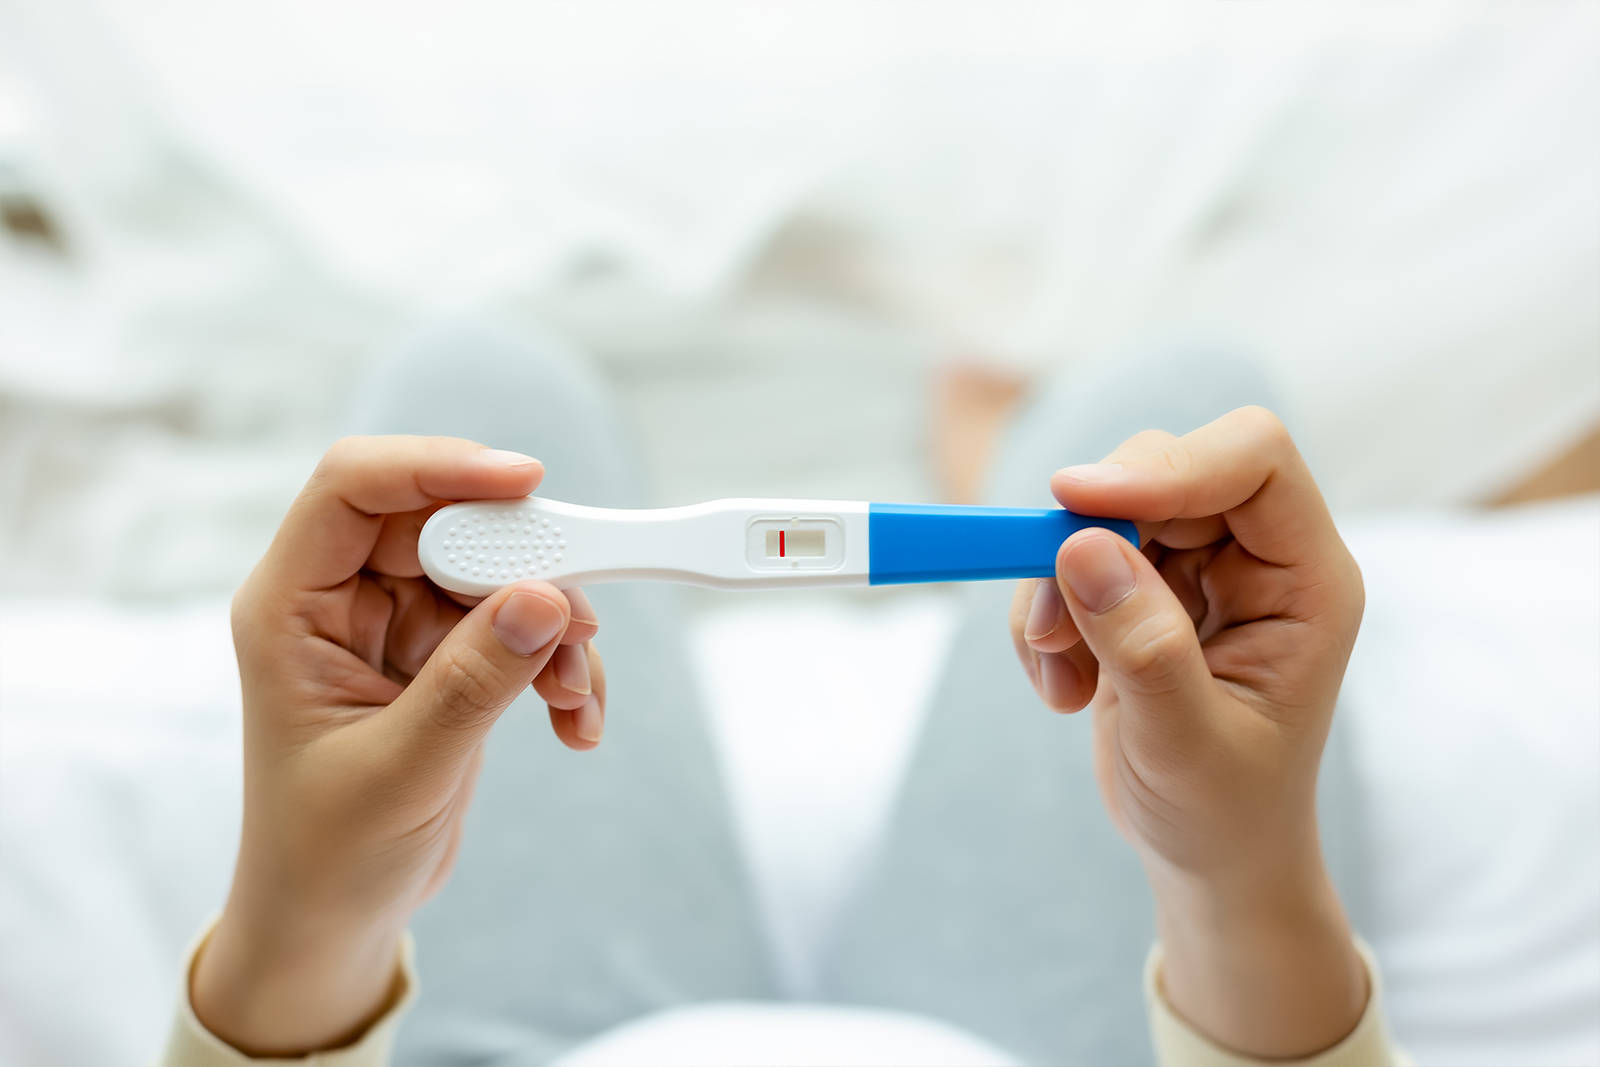 Primeiros sintomas de Gravidez - Como saber se estou grávida?